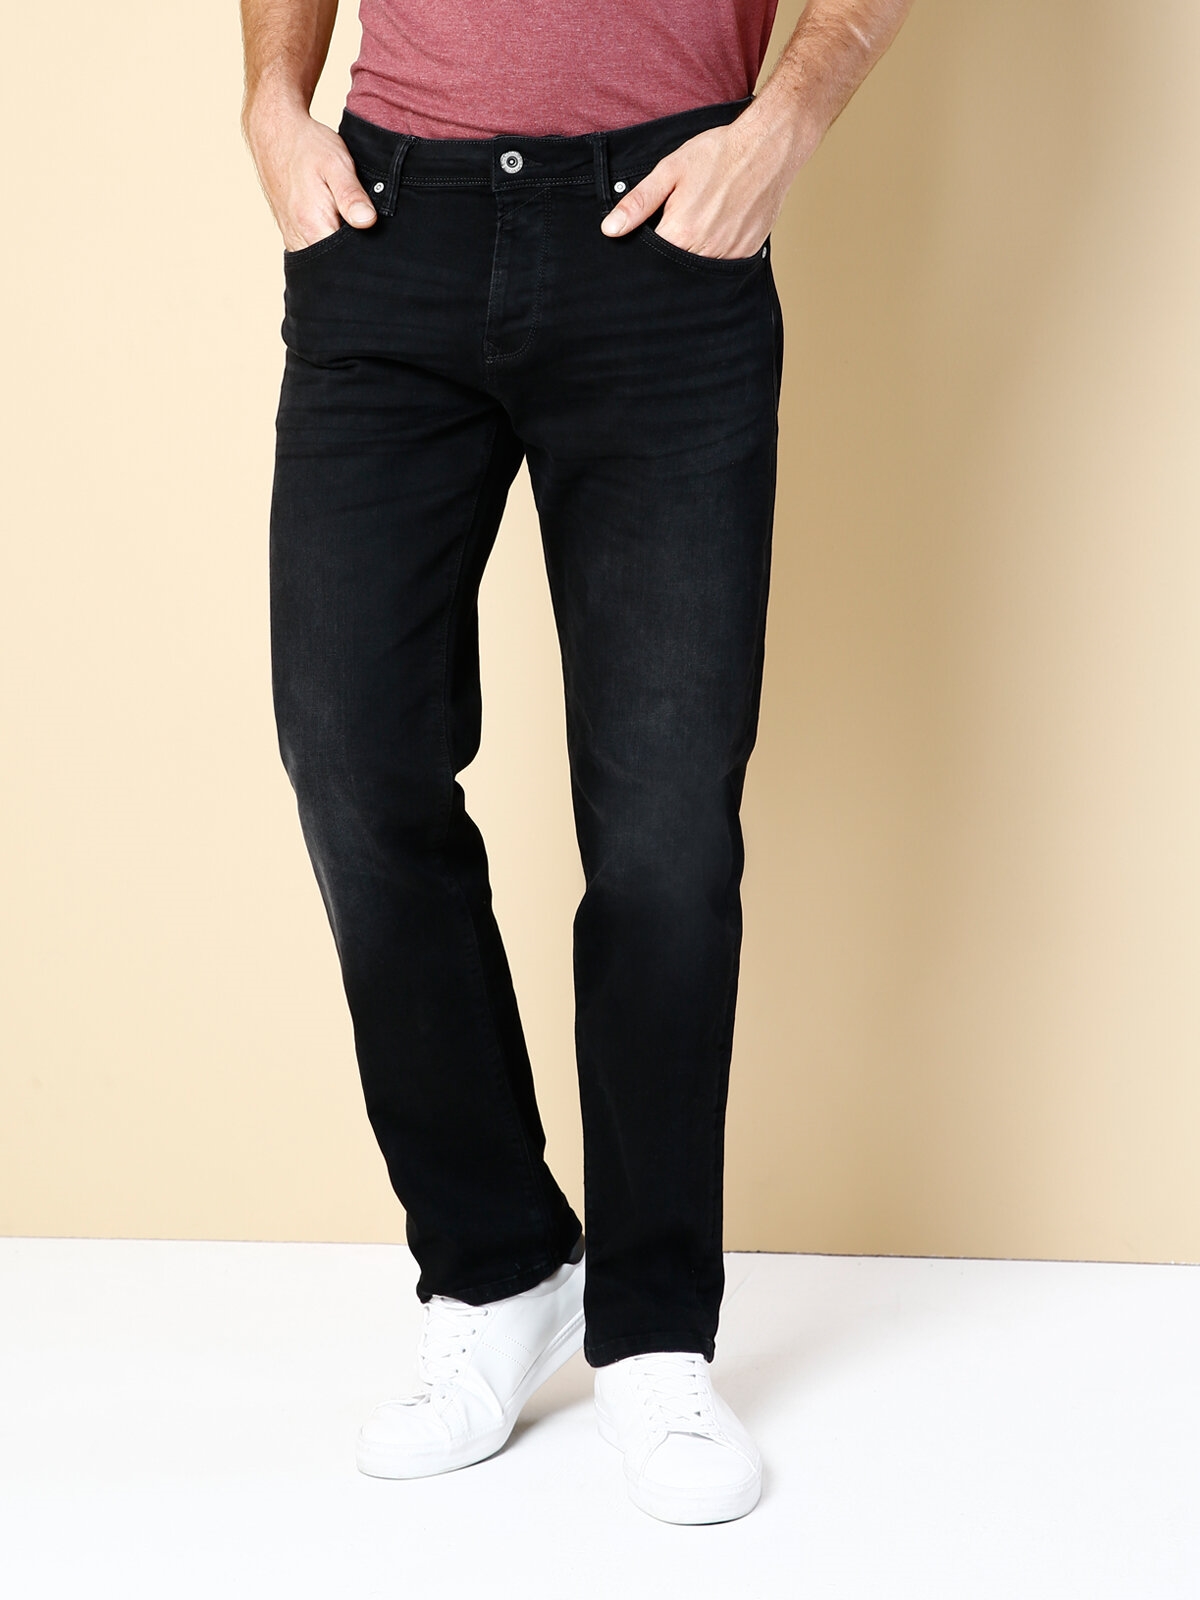 Afișați detalii pentru Negru Barbati Pantaloni Regular Fit-Medium Rise-Tapered Leg